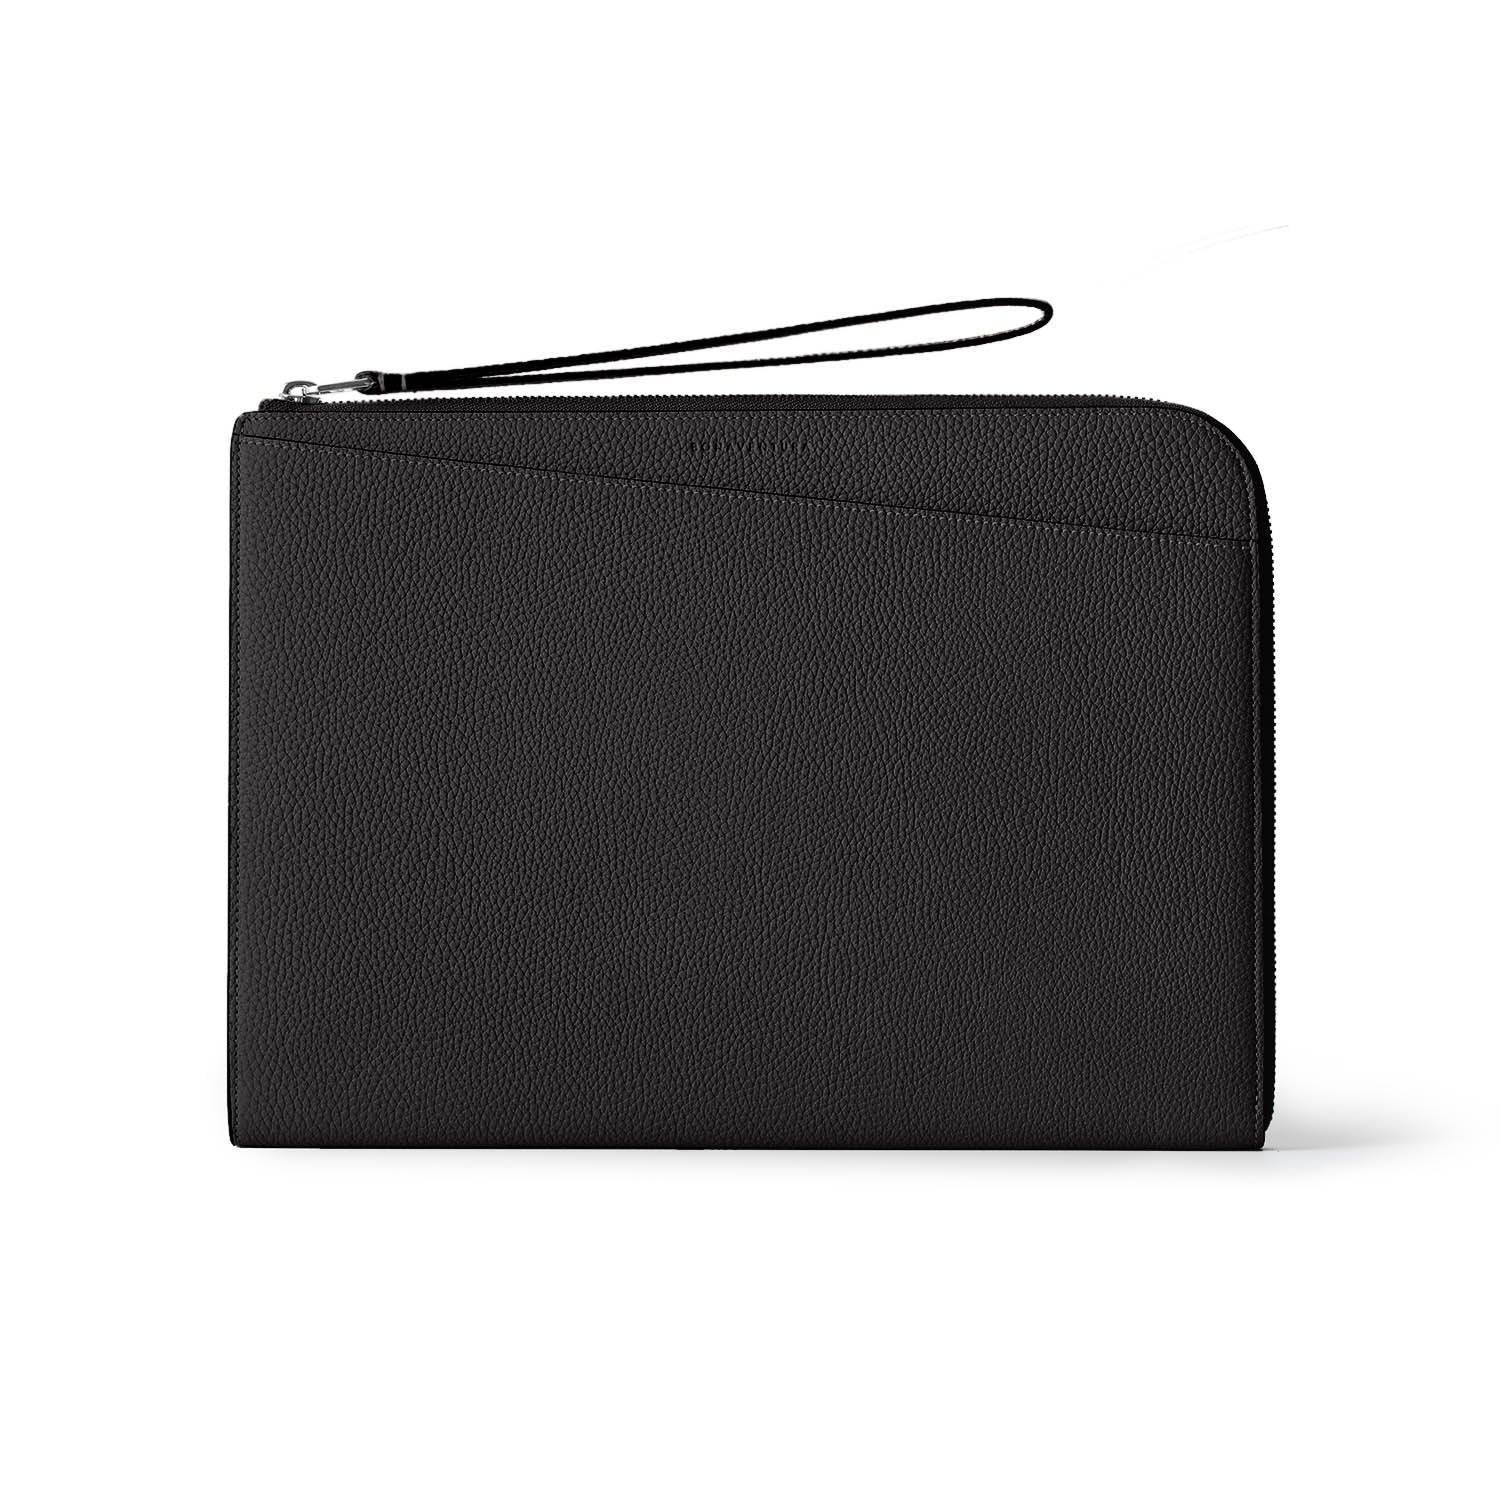 Fabio clutch bag in shrink leather, black